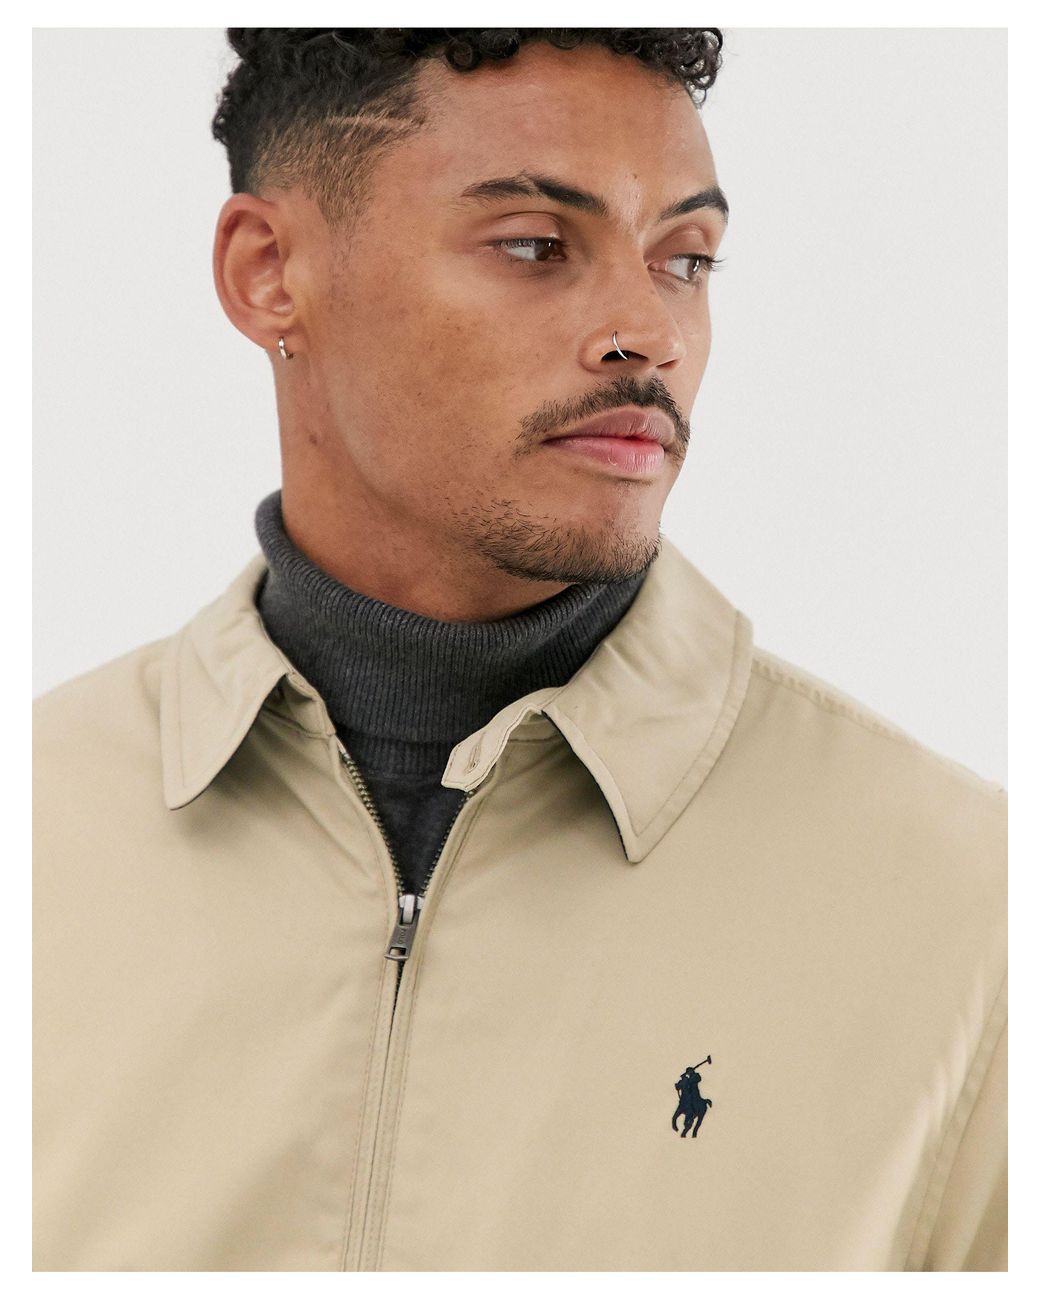 Polo Ralph Lauren Harrington Jacket in Natural for Men | Lyst